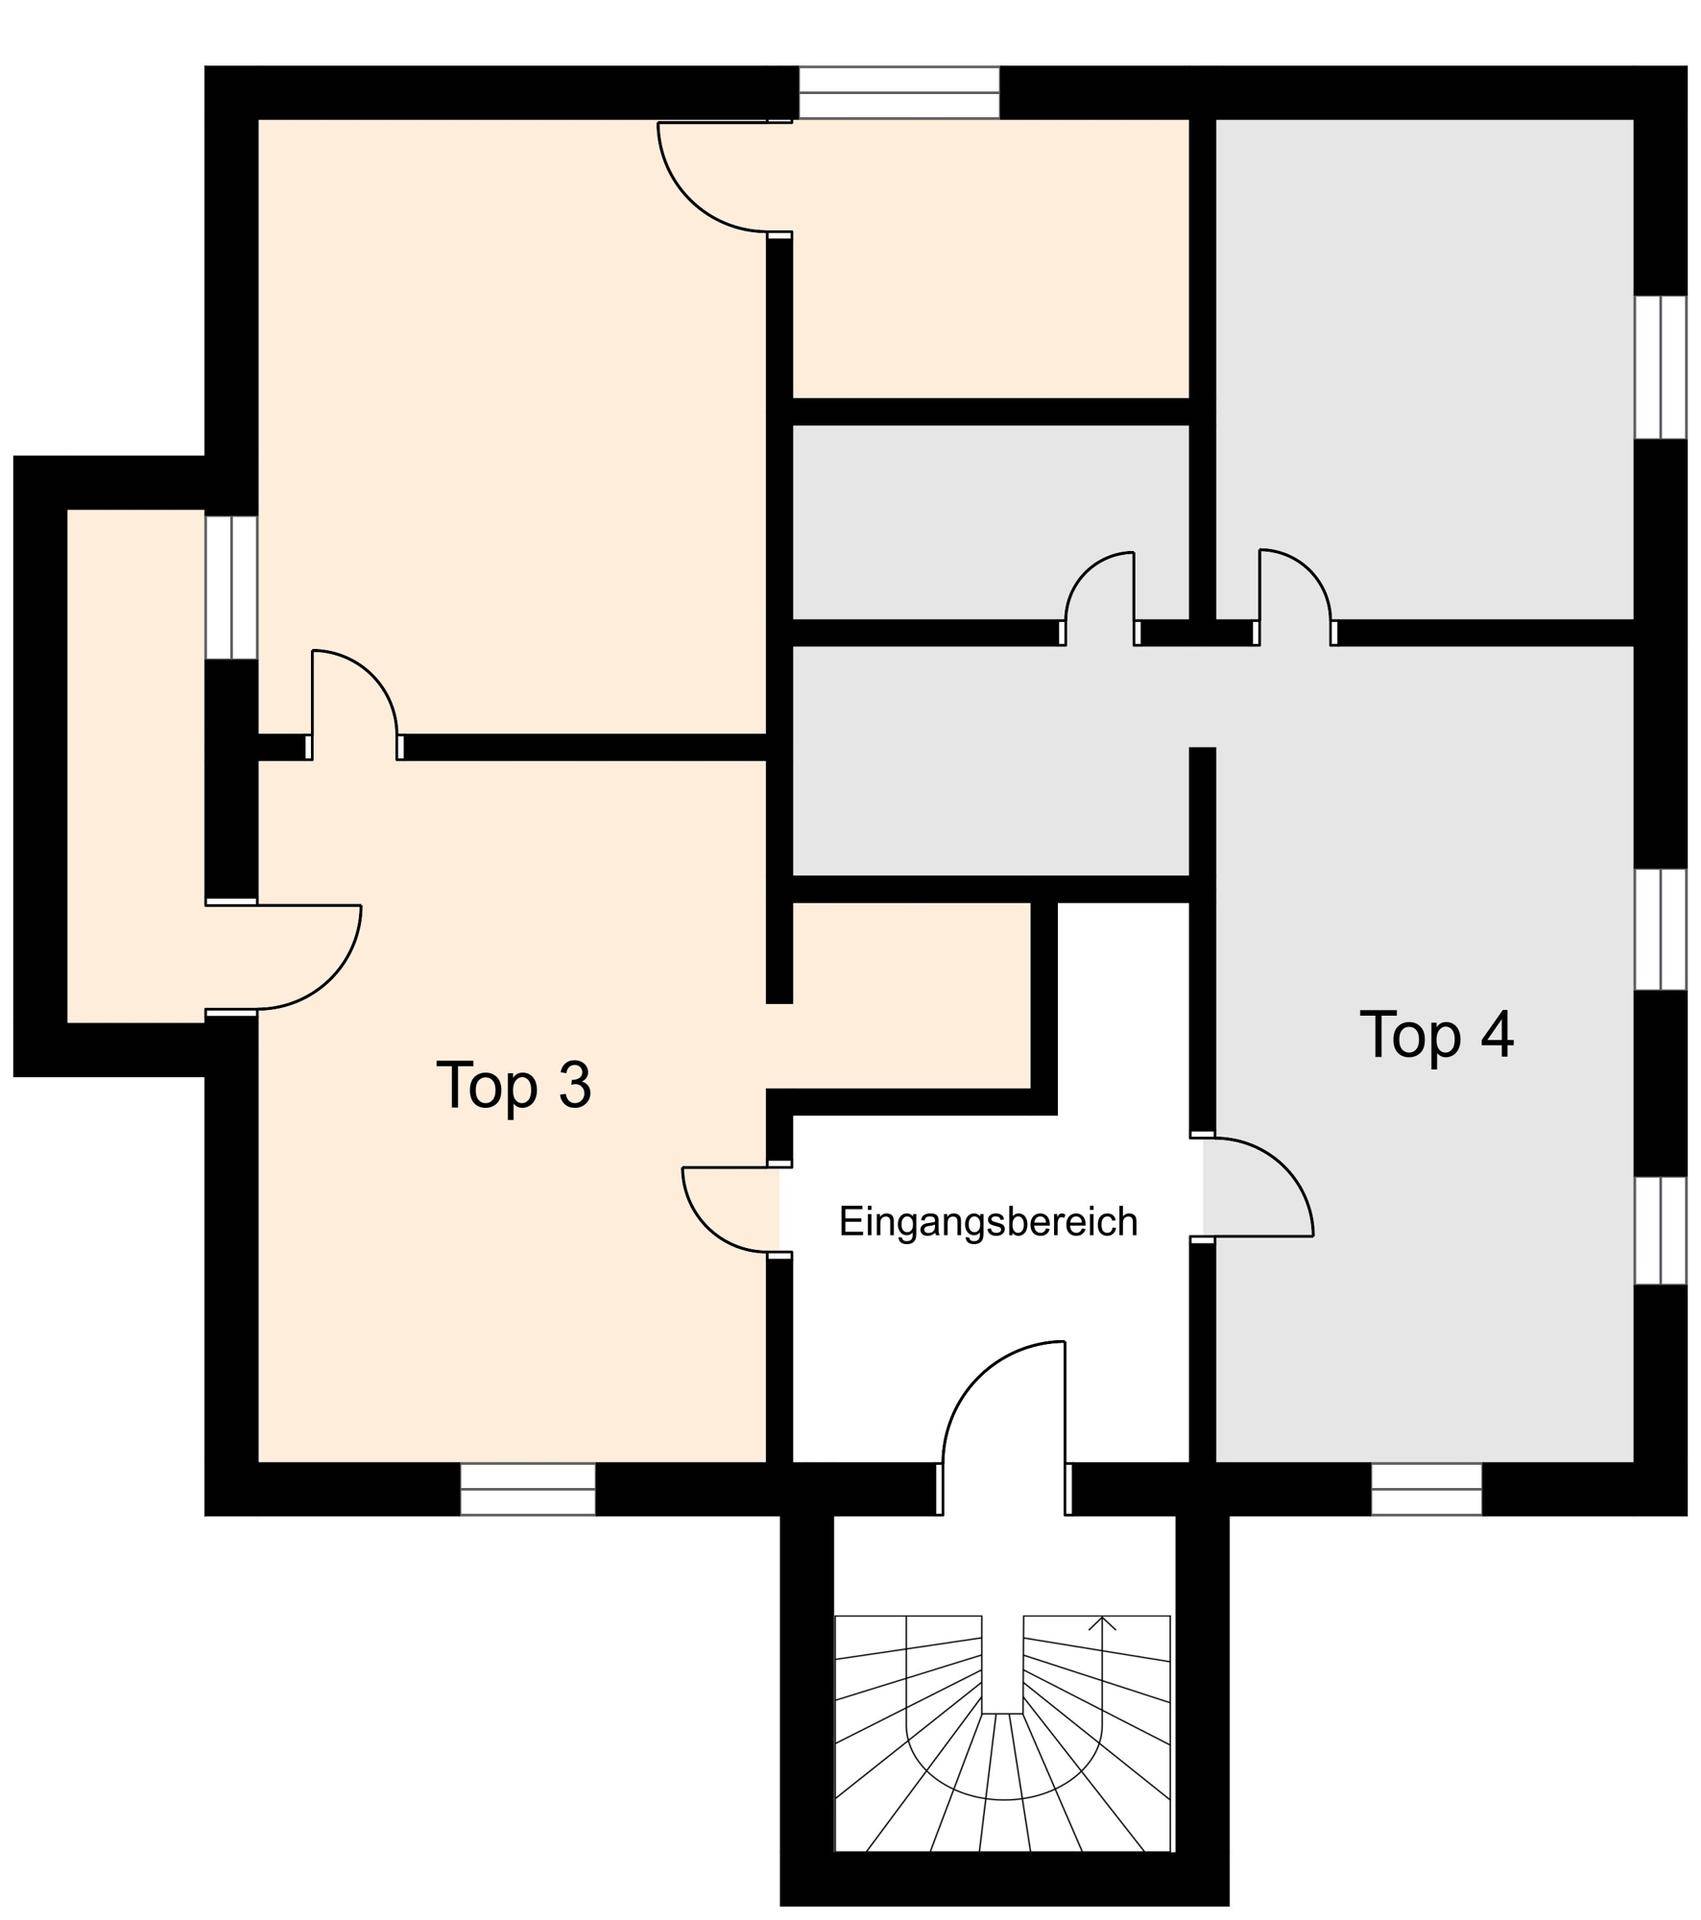 Grundriss- 2. Etage ohne Maßstab